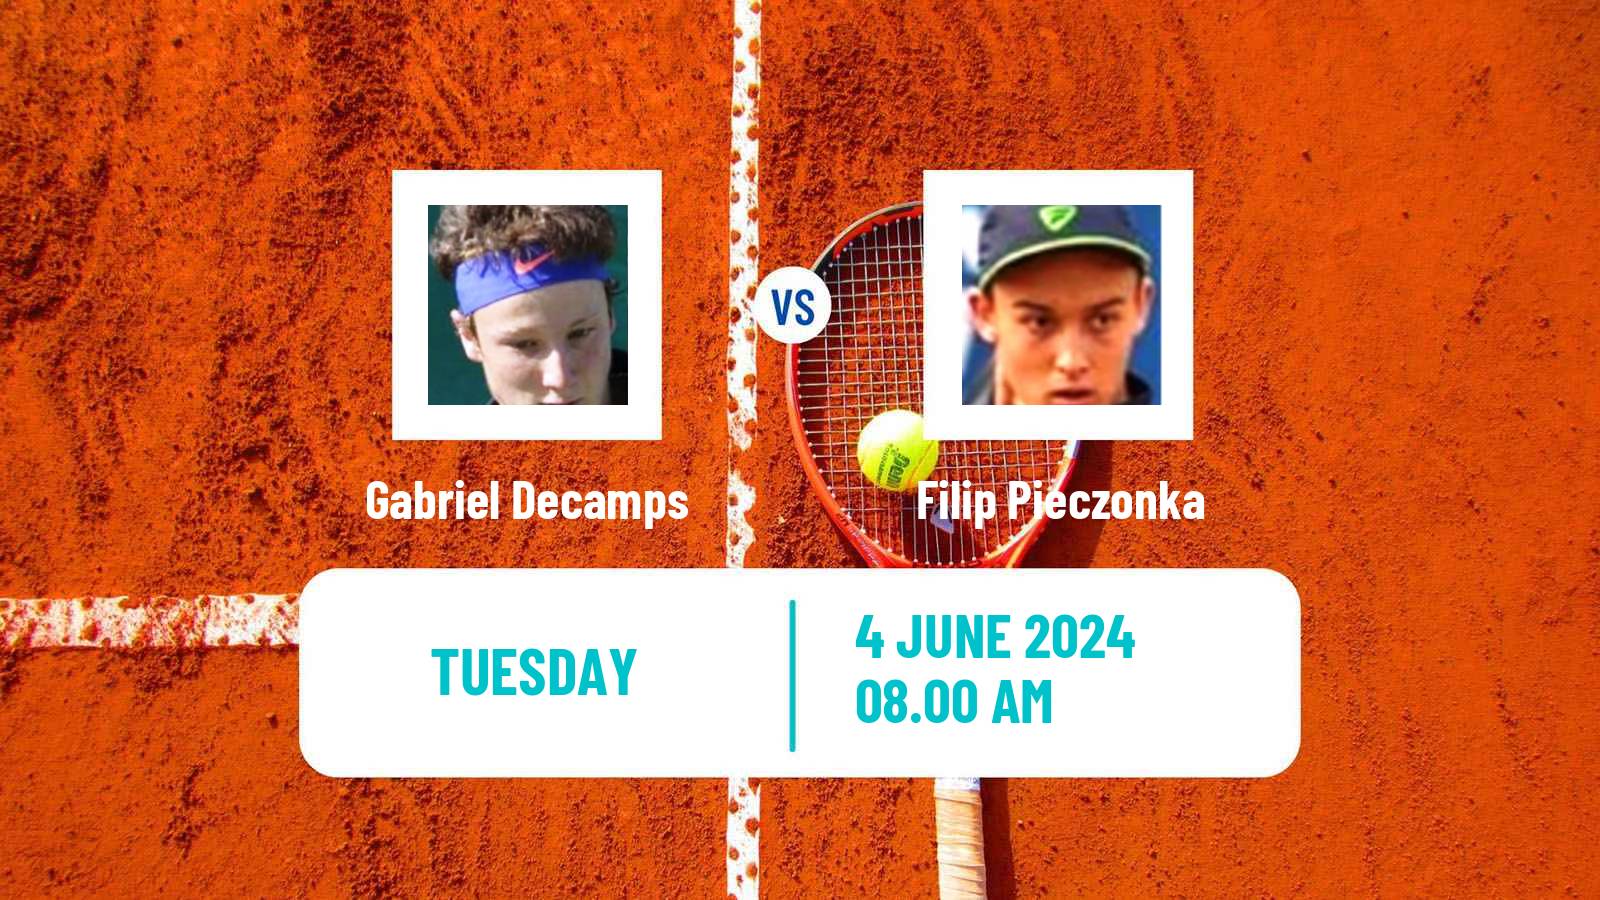 Tennis ITF M15 Grodzisk Mazowiecki Men Gabriel Decamps - Filip Pieczonka